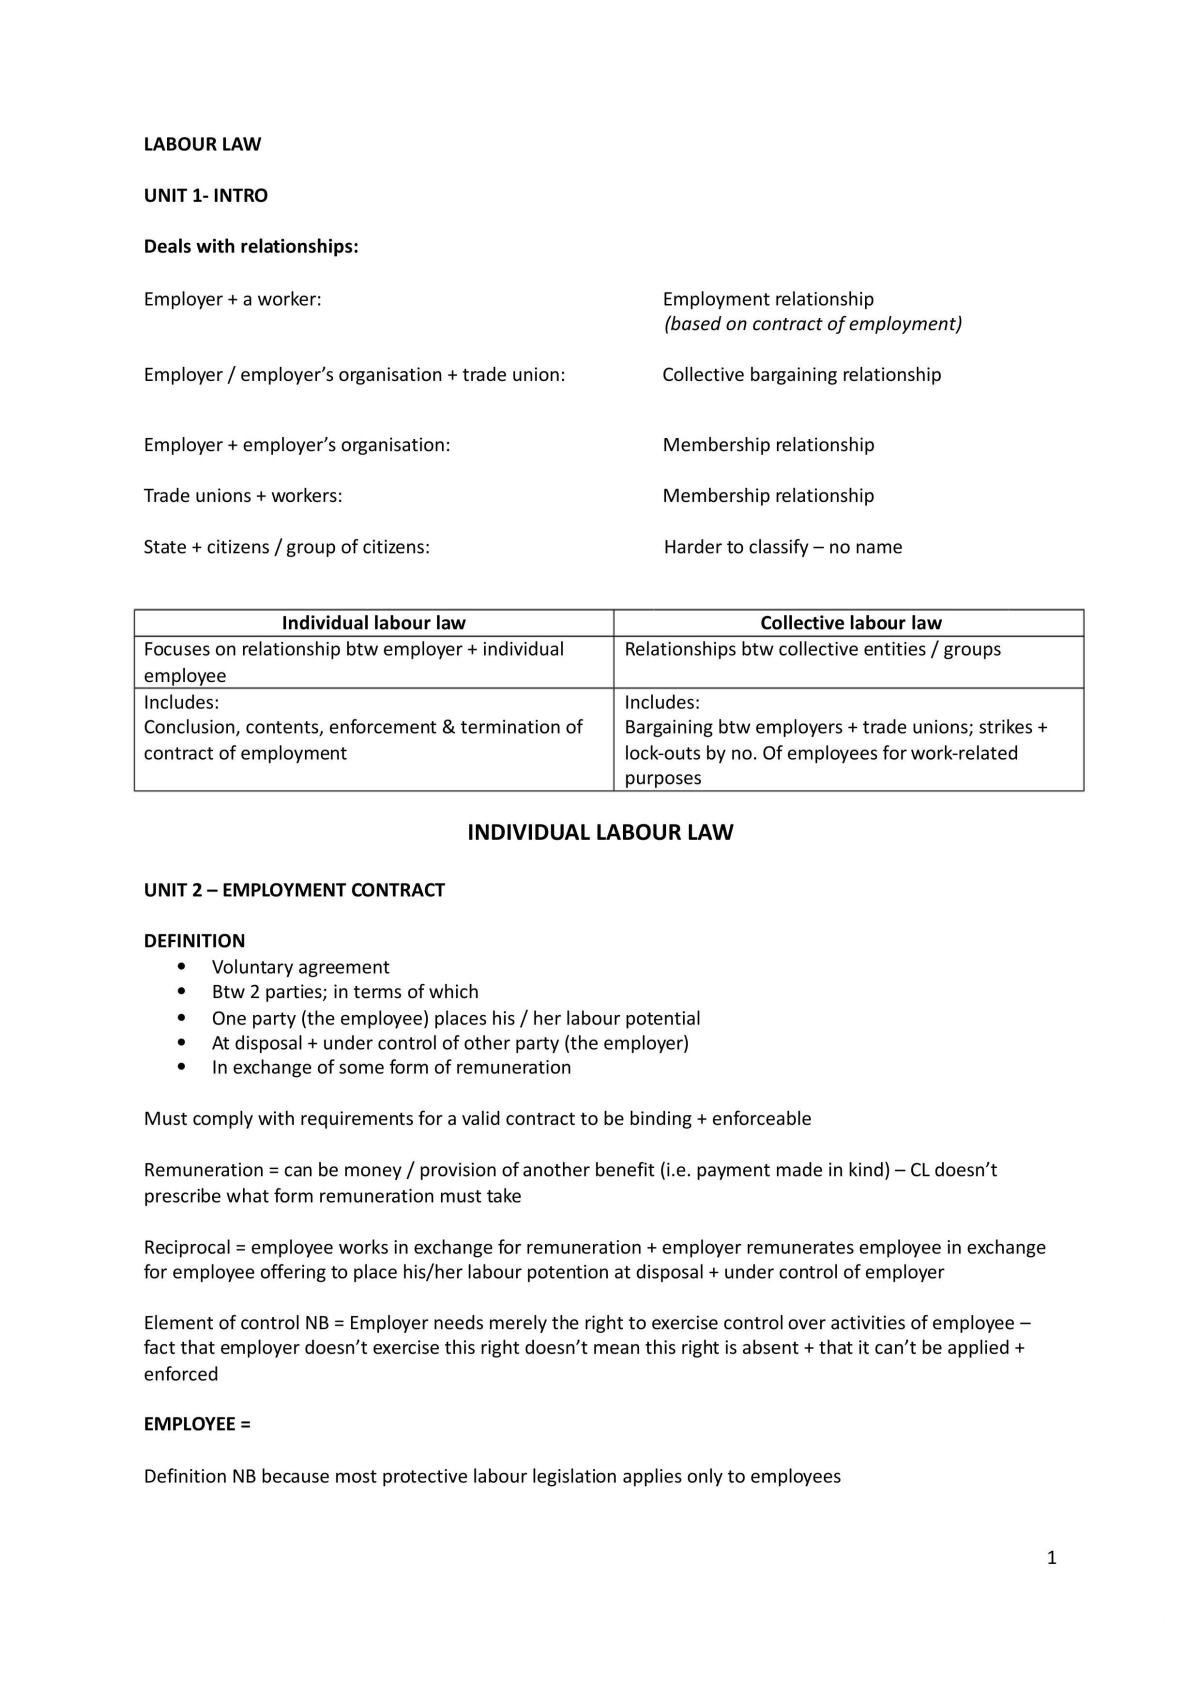 Labour Law Course Notes - Page 1